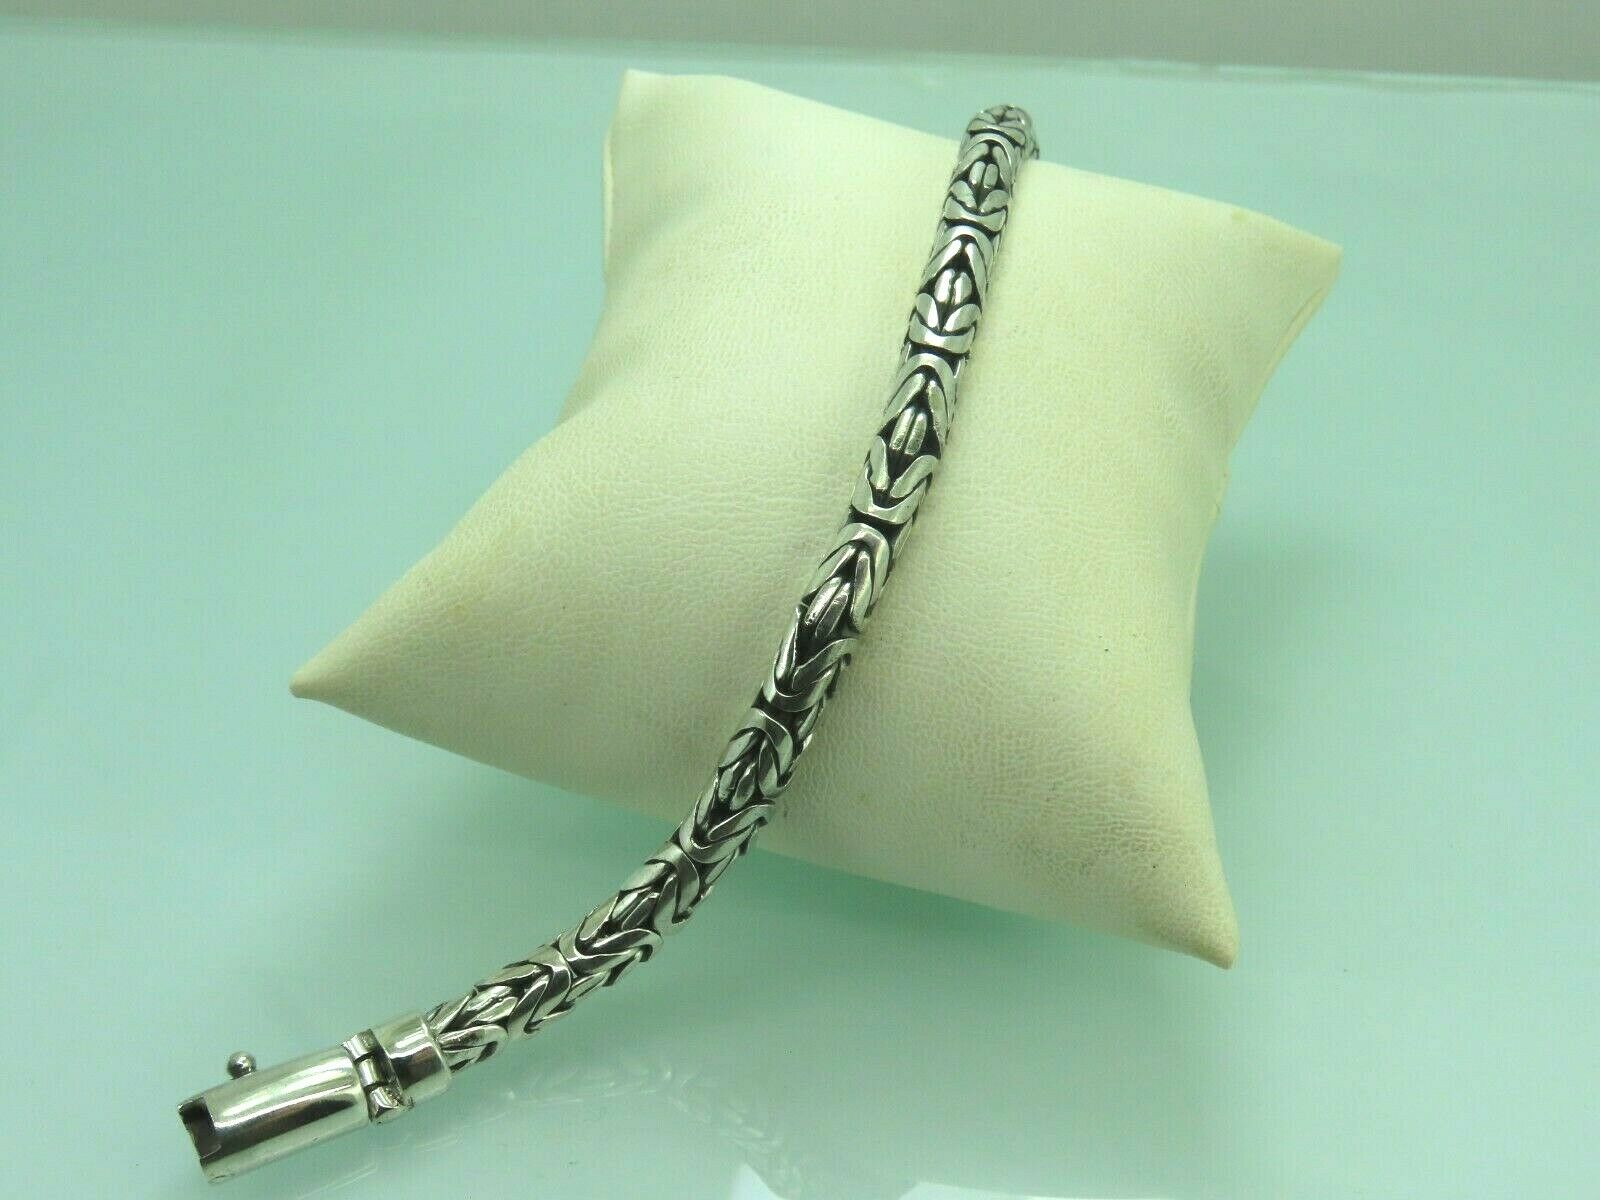 Turkish Handmade Jewelry 925 Sterling Silver Chain Design Men Bracelets